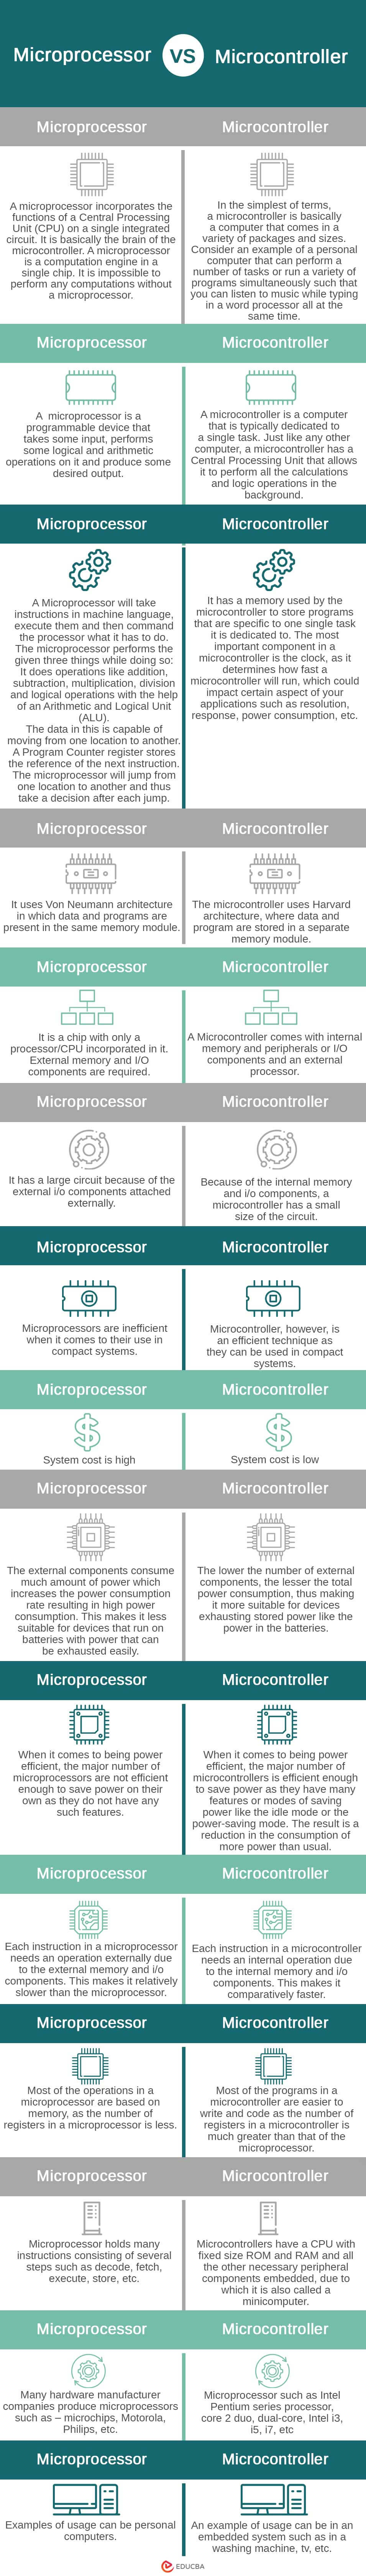 Microprocessor-vs-Microcontroller-info